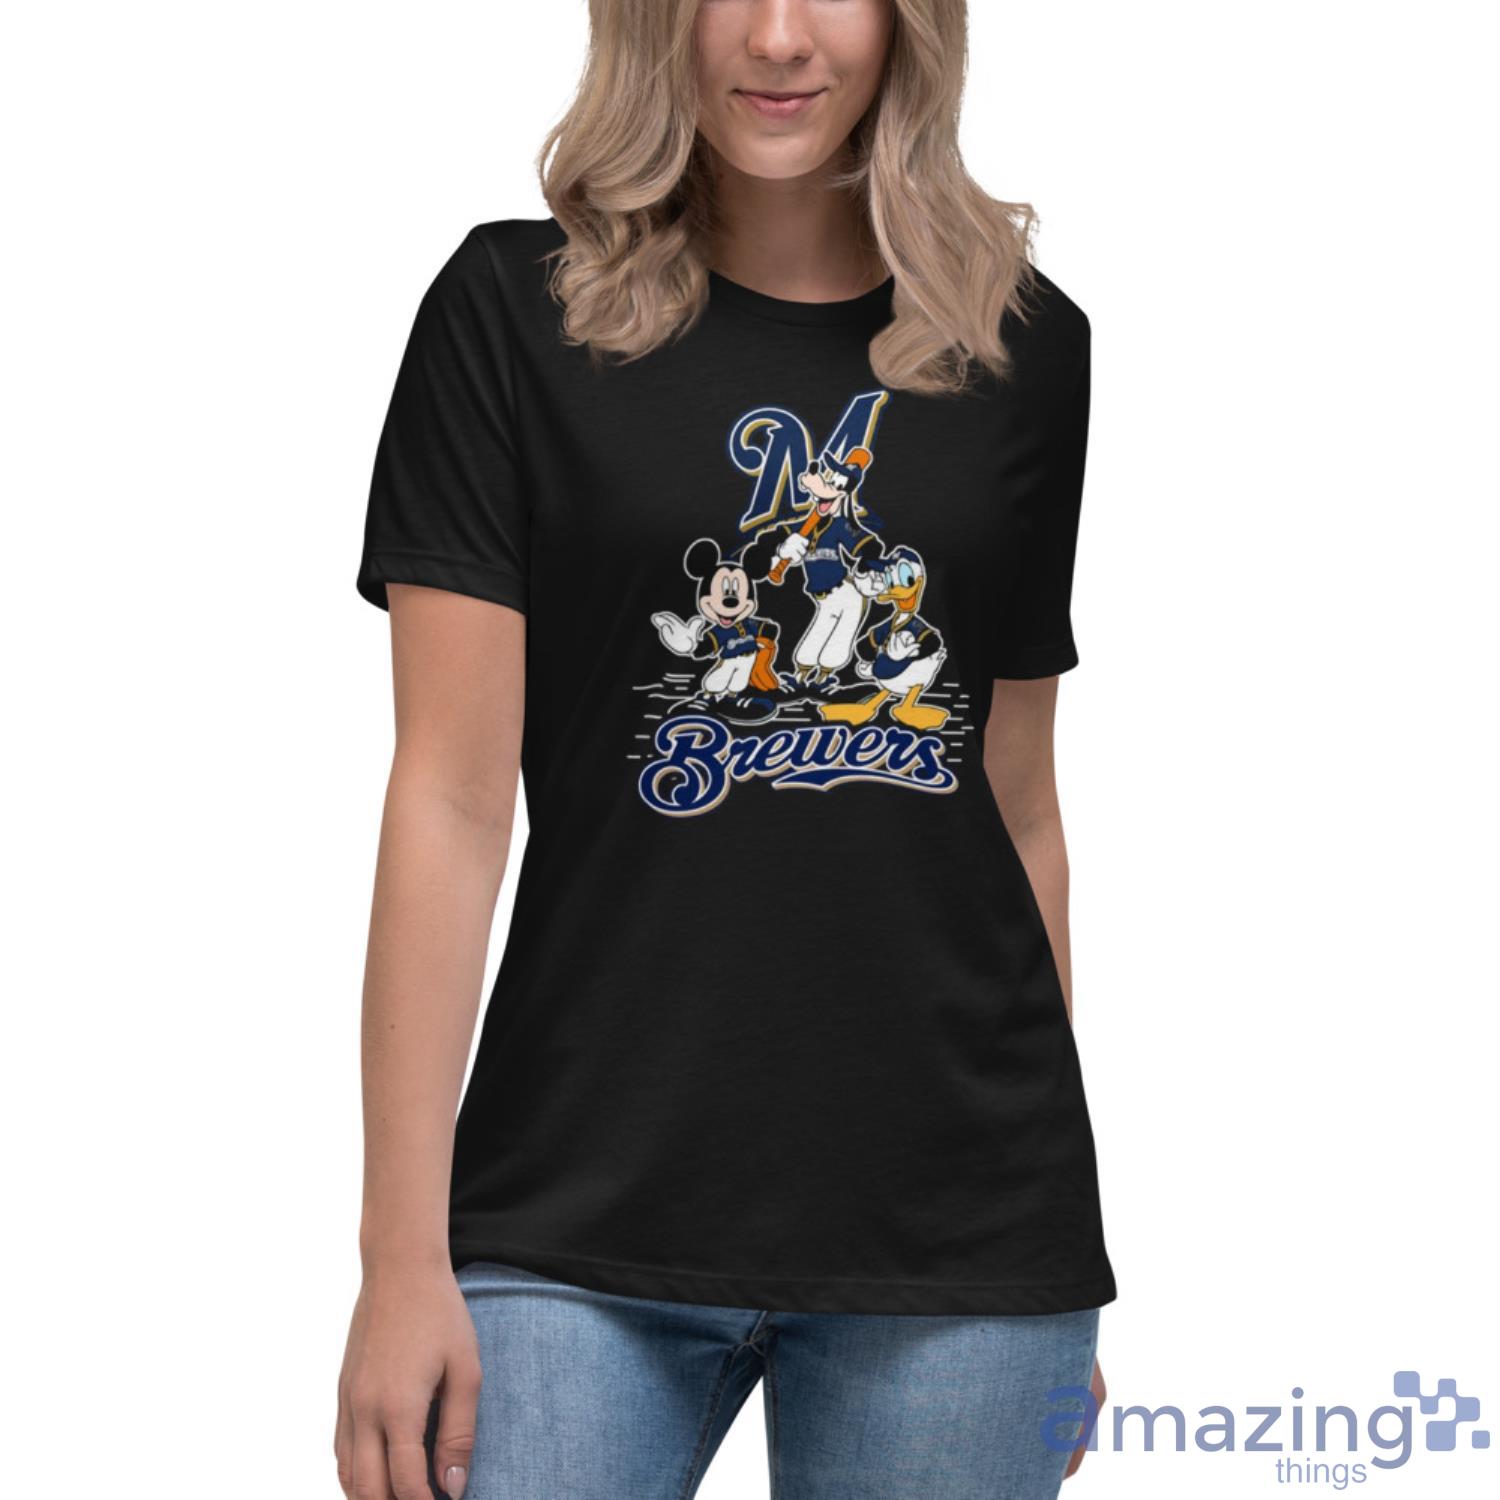 Baseball Mickey Team Milwaukee Brewers Youth T-Shirt 